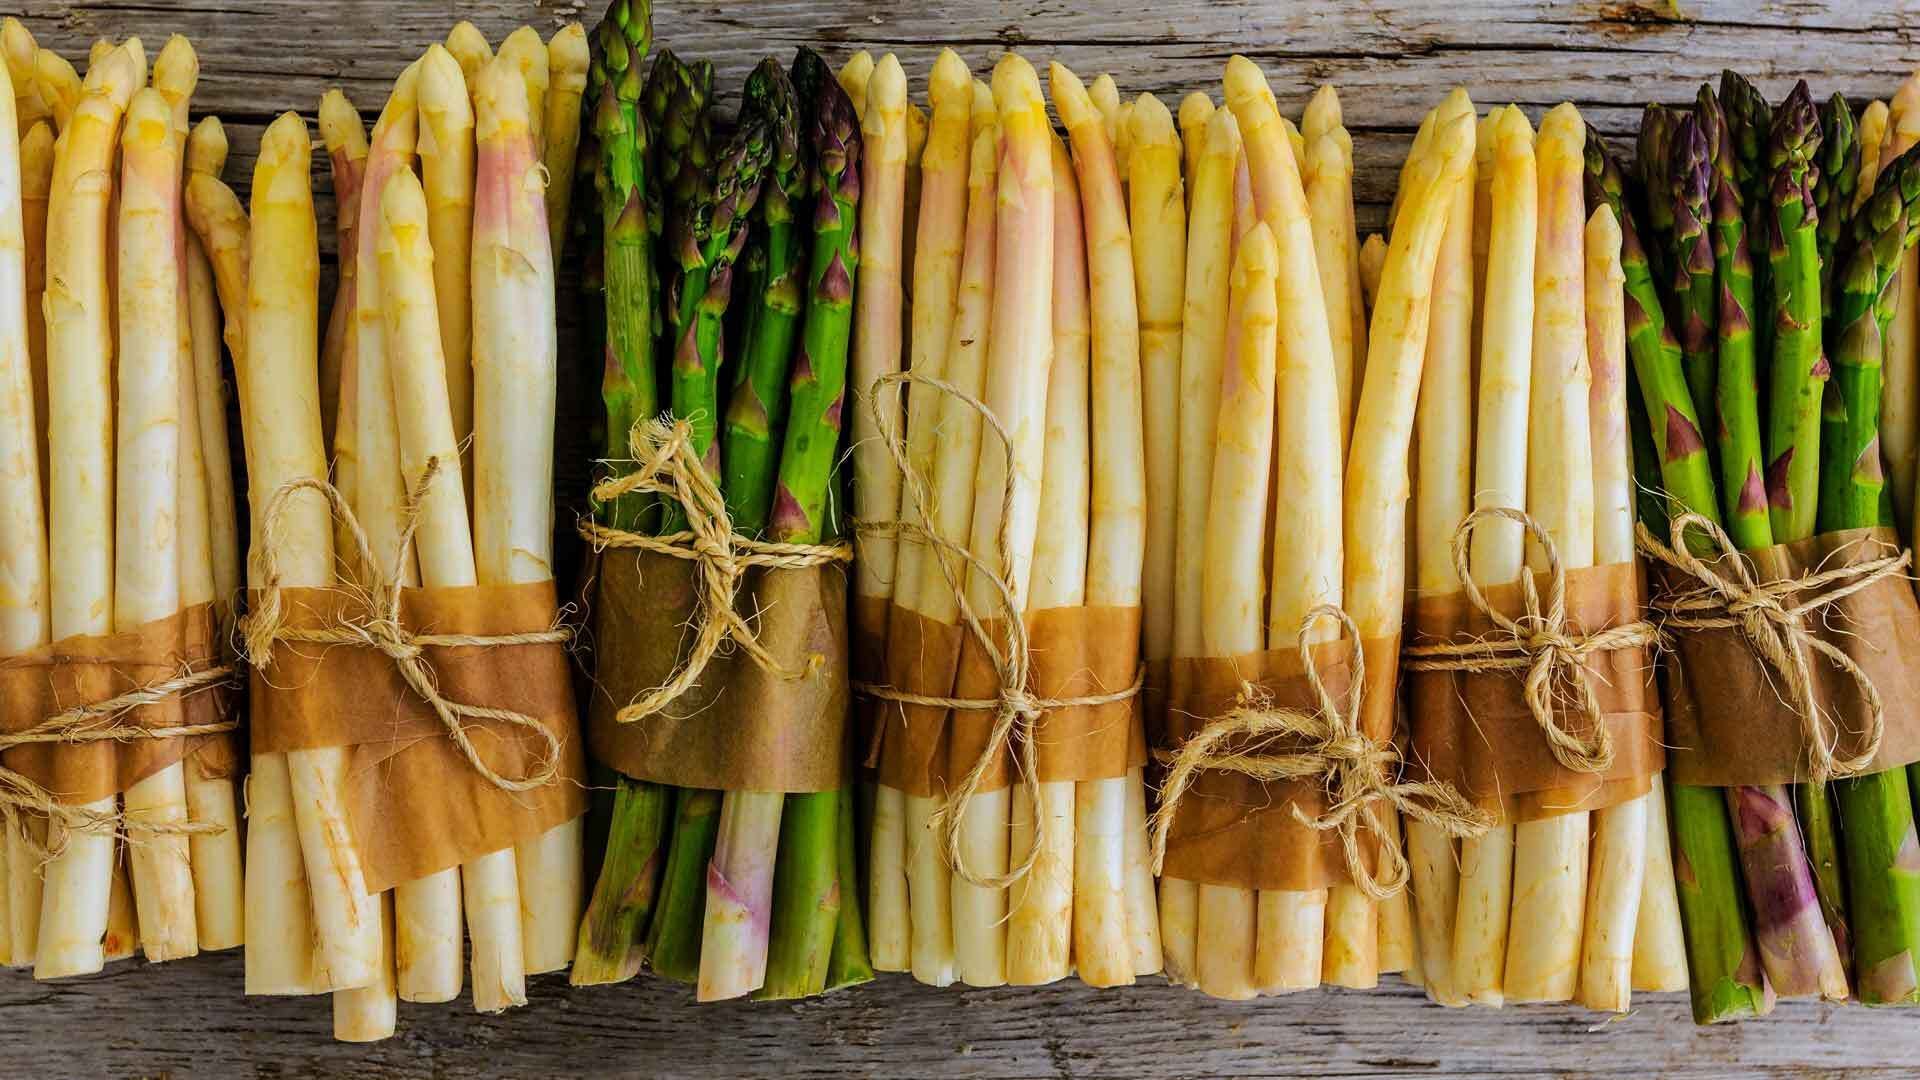 The asparagus secret: simple tricks for perfect enjoyment